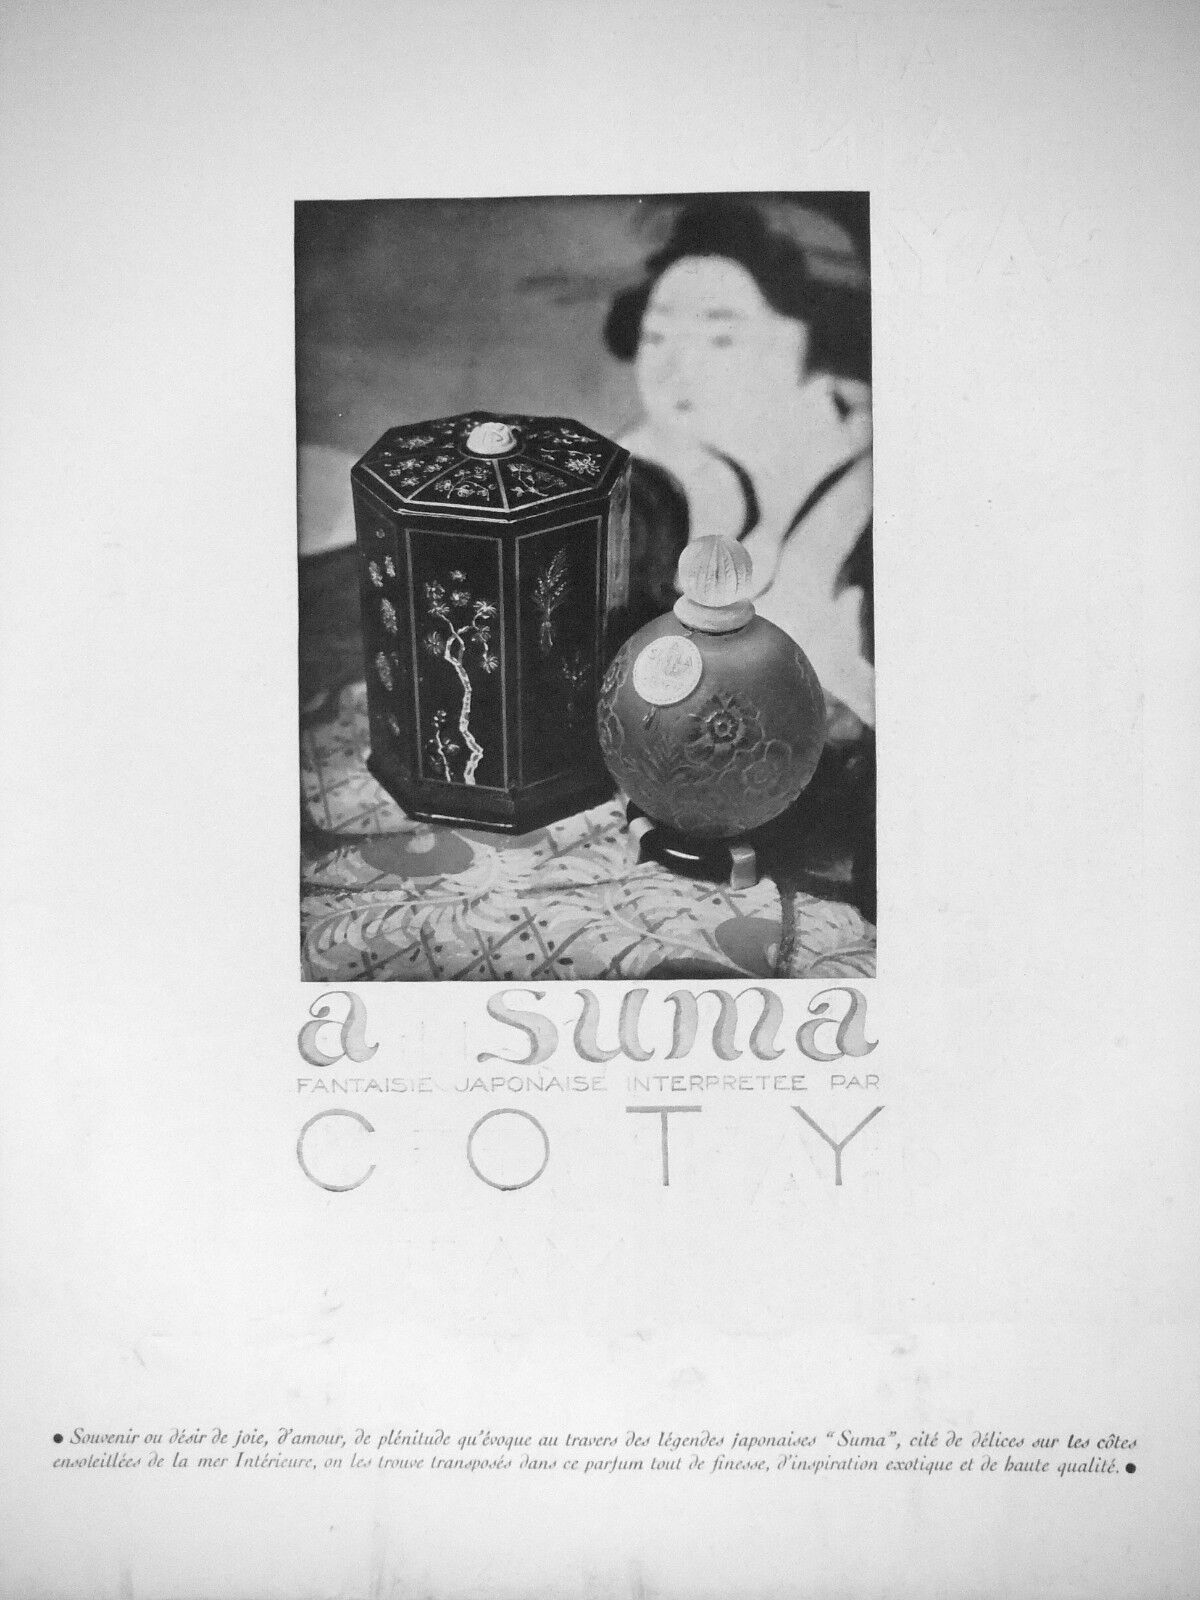 1934 AD SUMA PERFUME BY COTY JAPANESE FANTASY - ADVERTISING